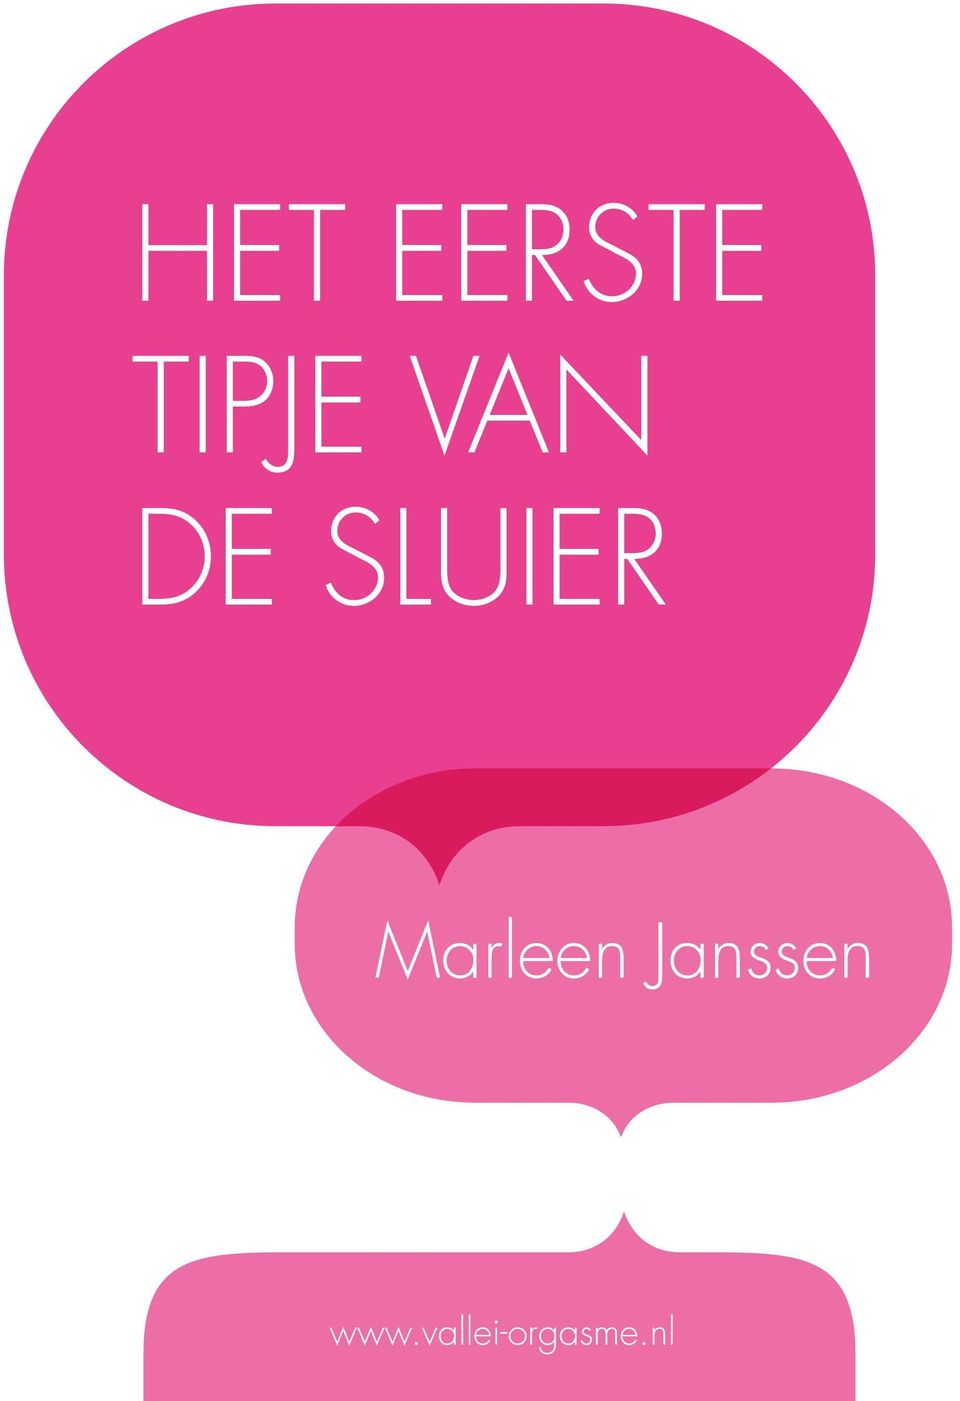 Marleen Janssen